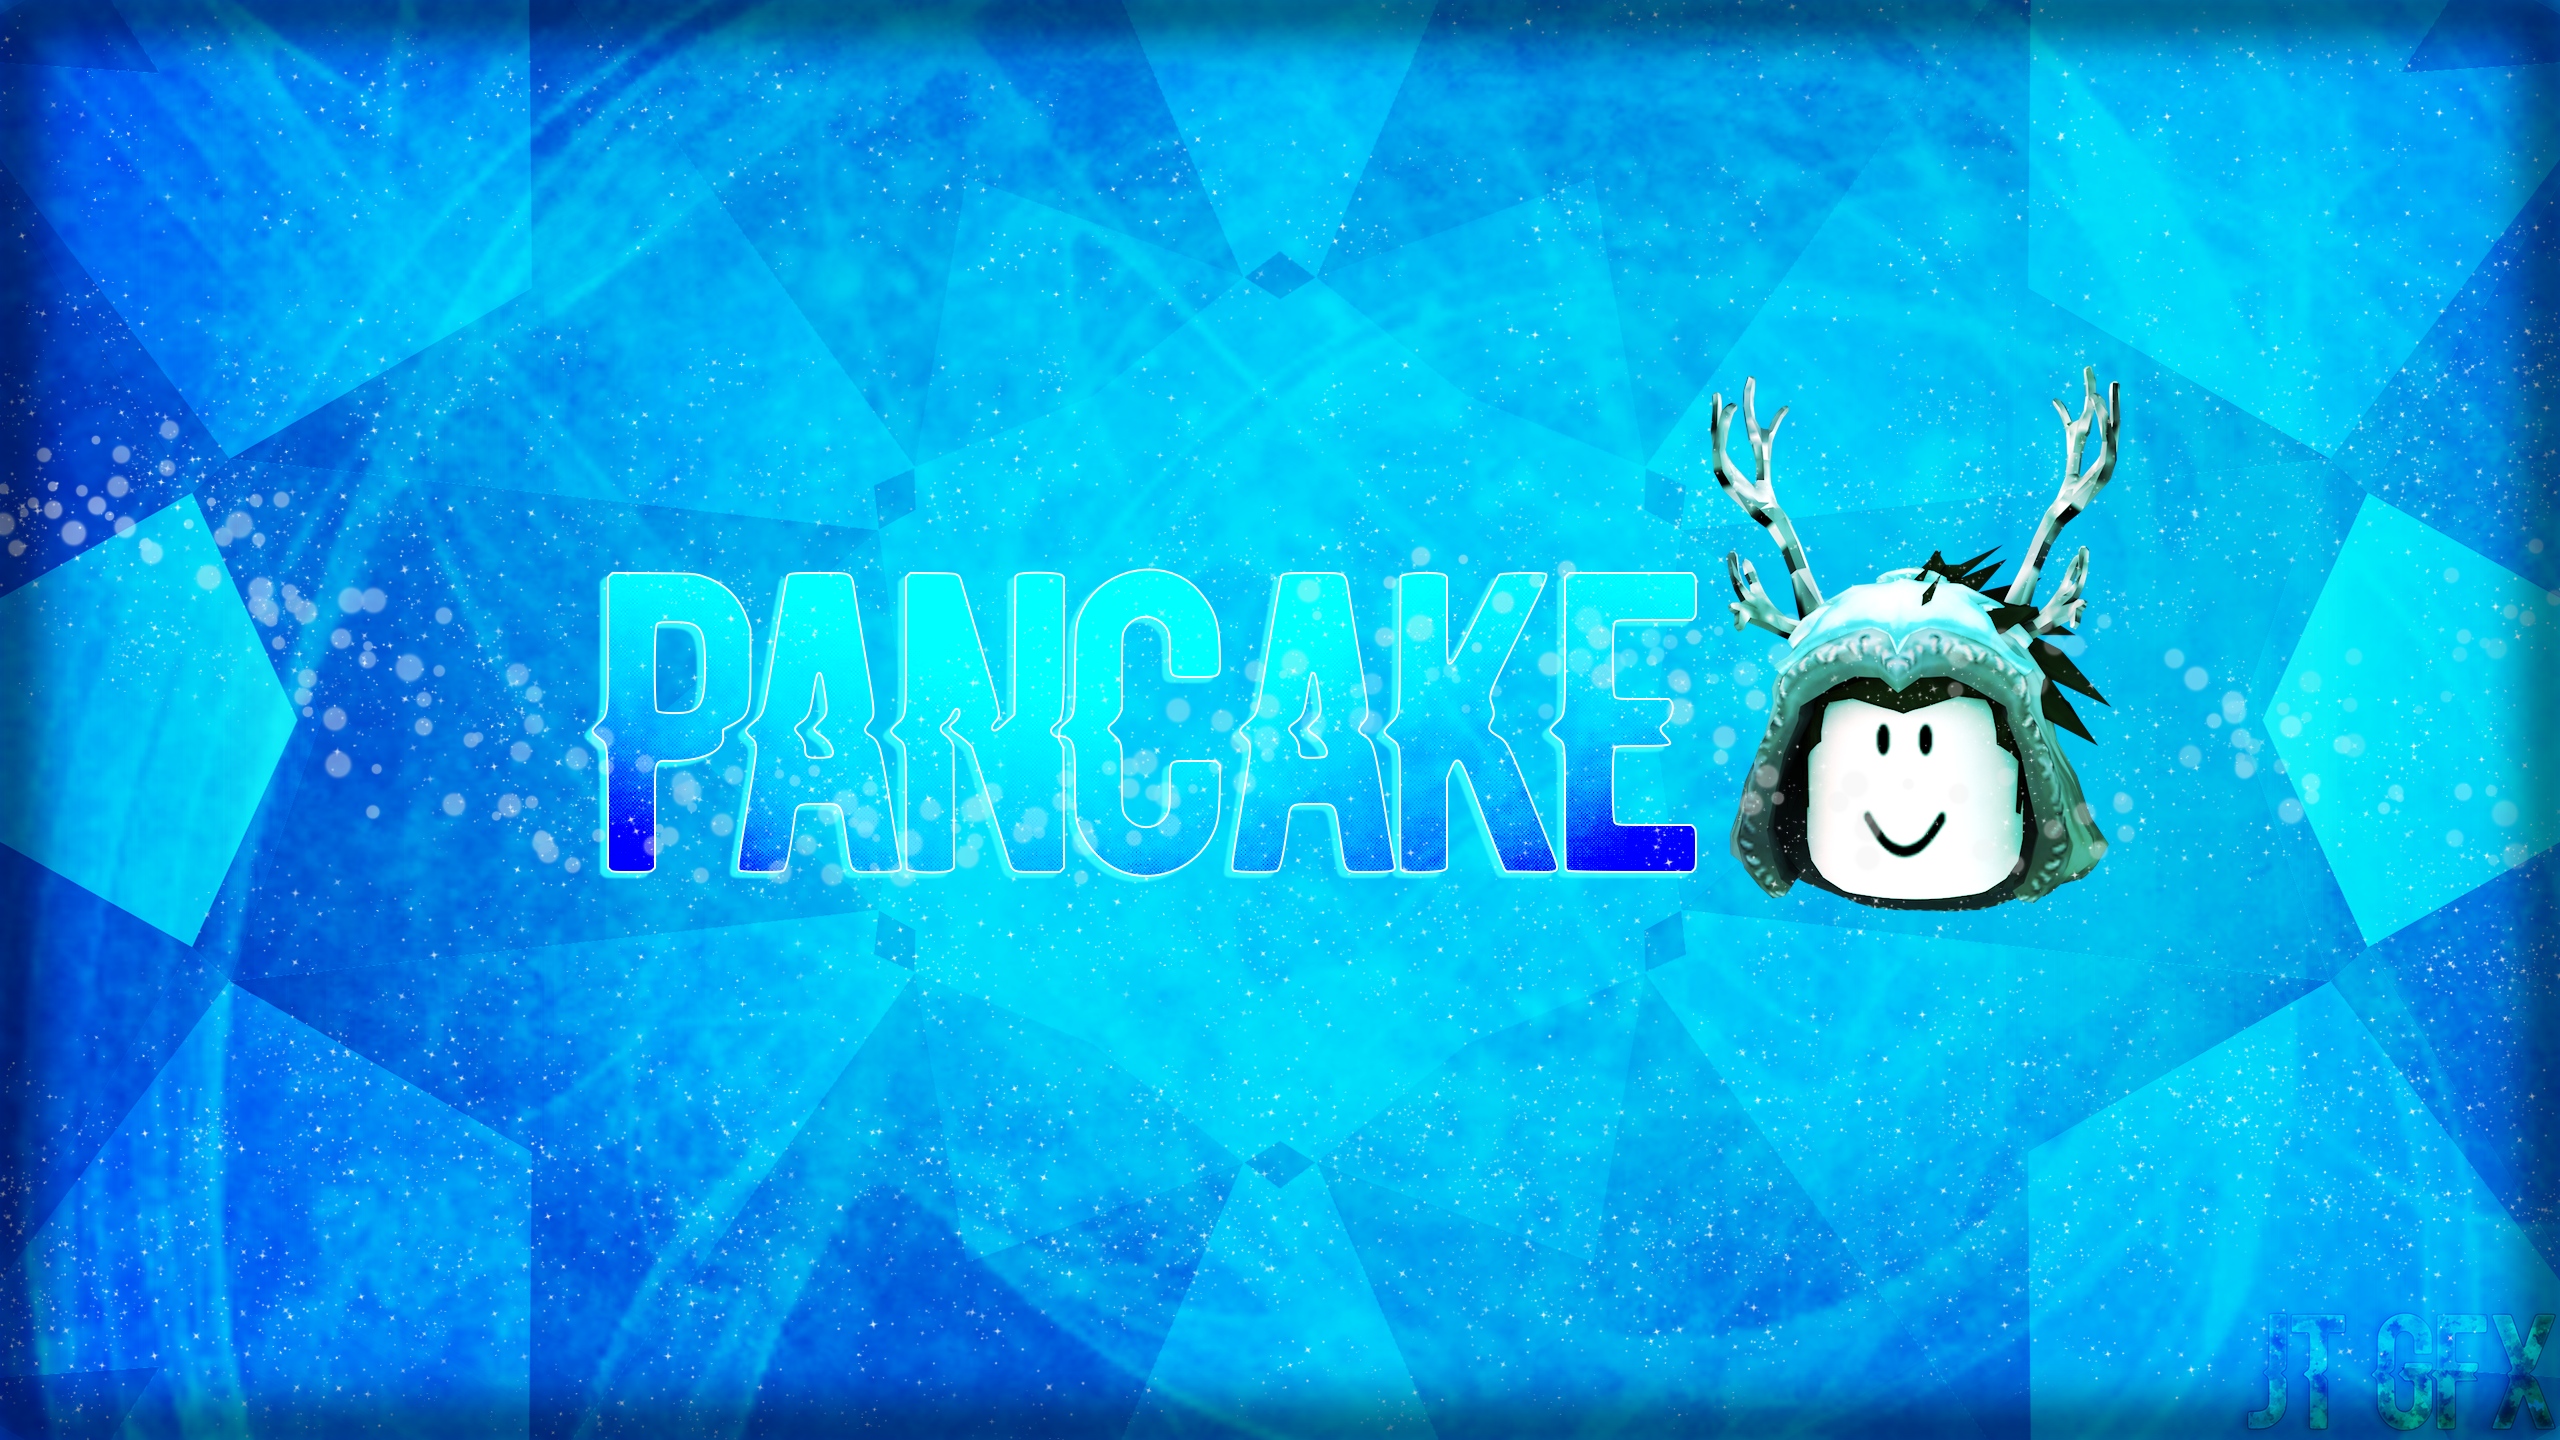 Pancakeexpired New Youtube Channel Art By Jonathantran0409gfx On Deviantart